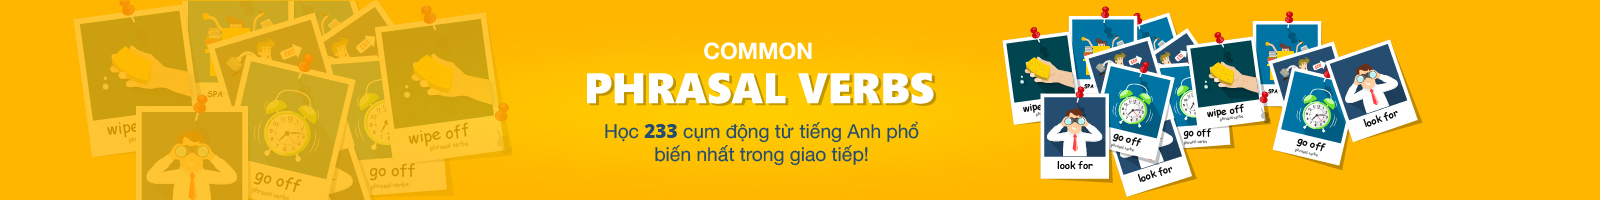 Common Phrasal Verbs 1